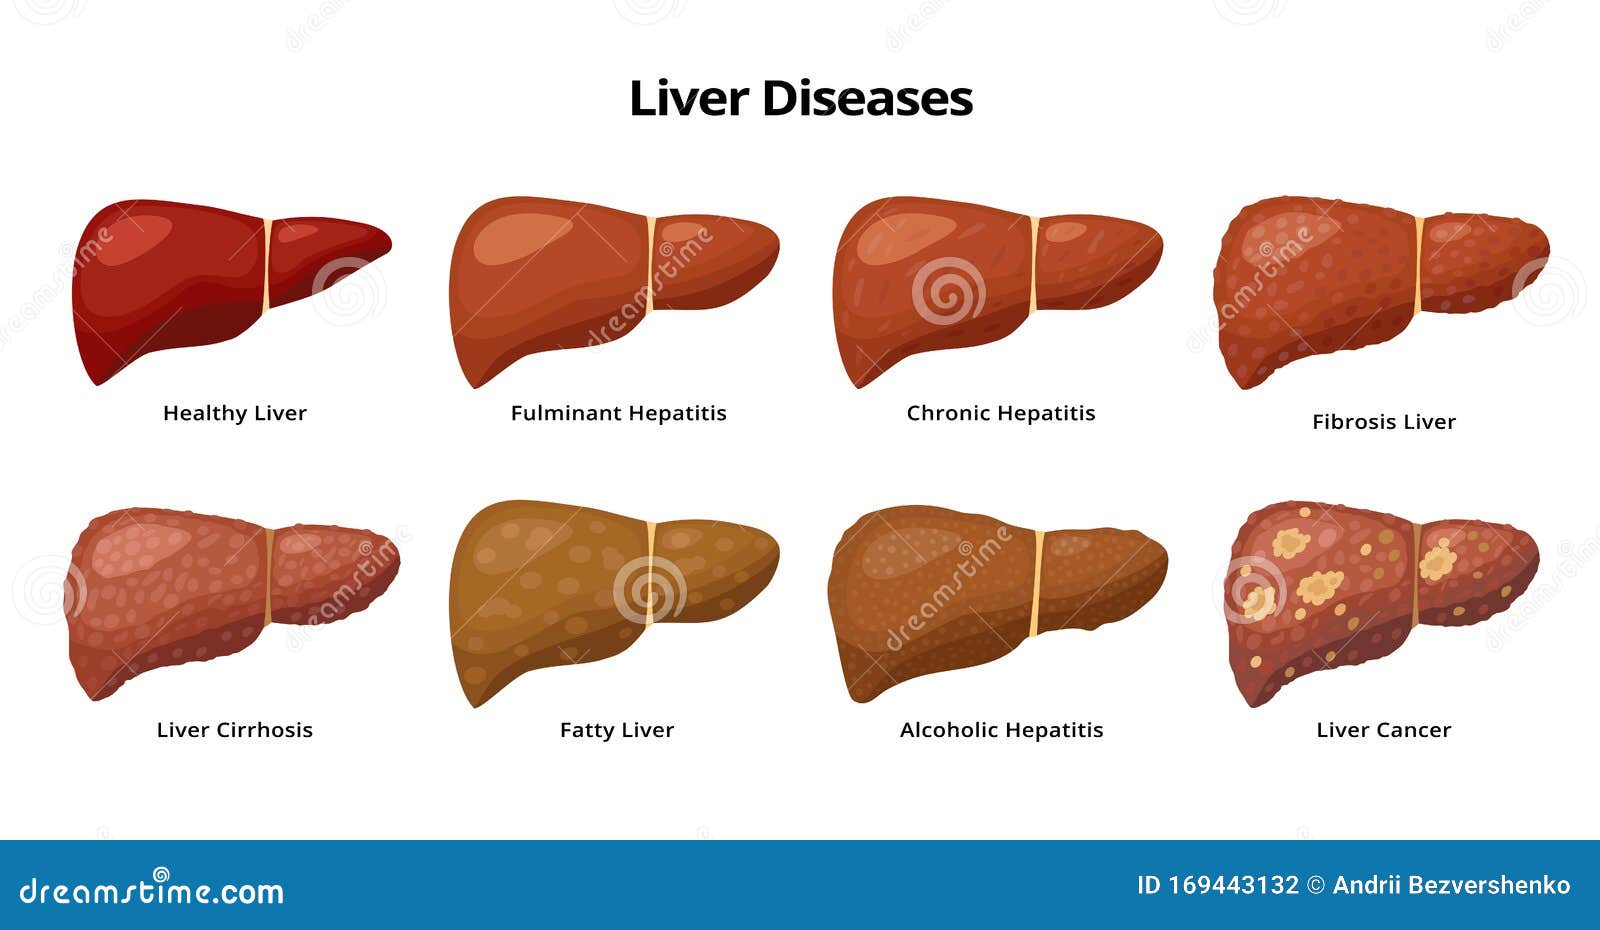 healthy liver and liver diseases - fatty liver, hepatitis, fibrosis, cirrhosis, alcoholic hepatitis, liver cancer -